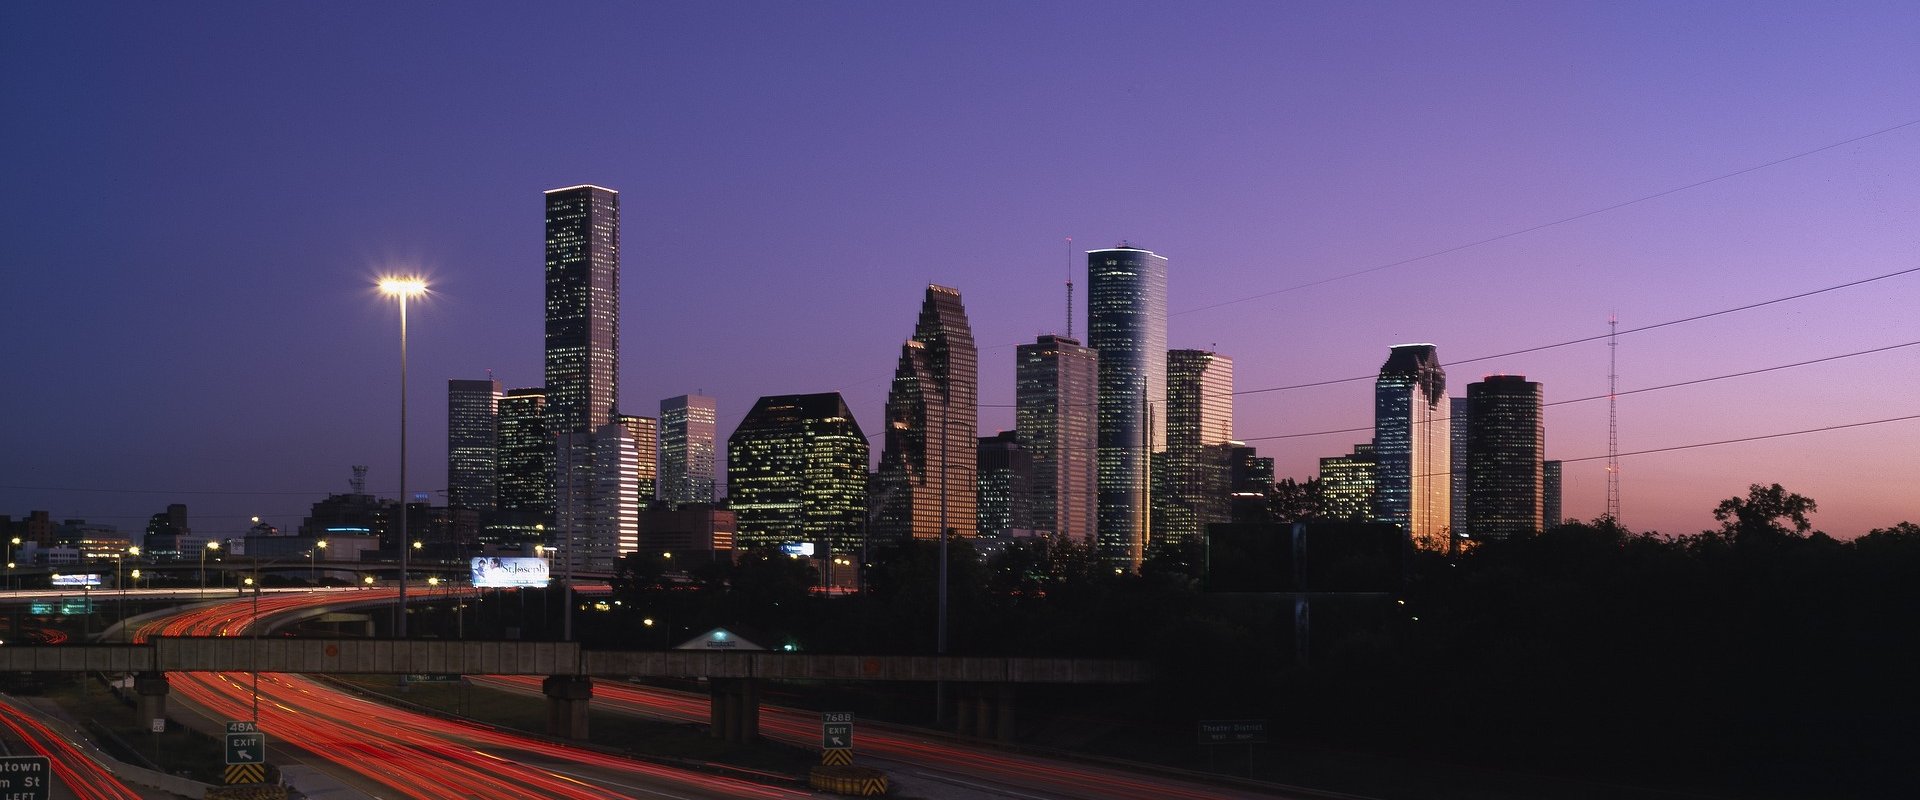 We Buy Houses Houston Texas - Sell My House Fast Houston Texas